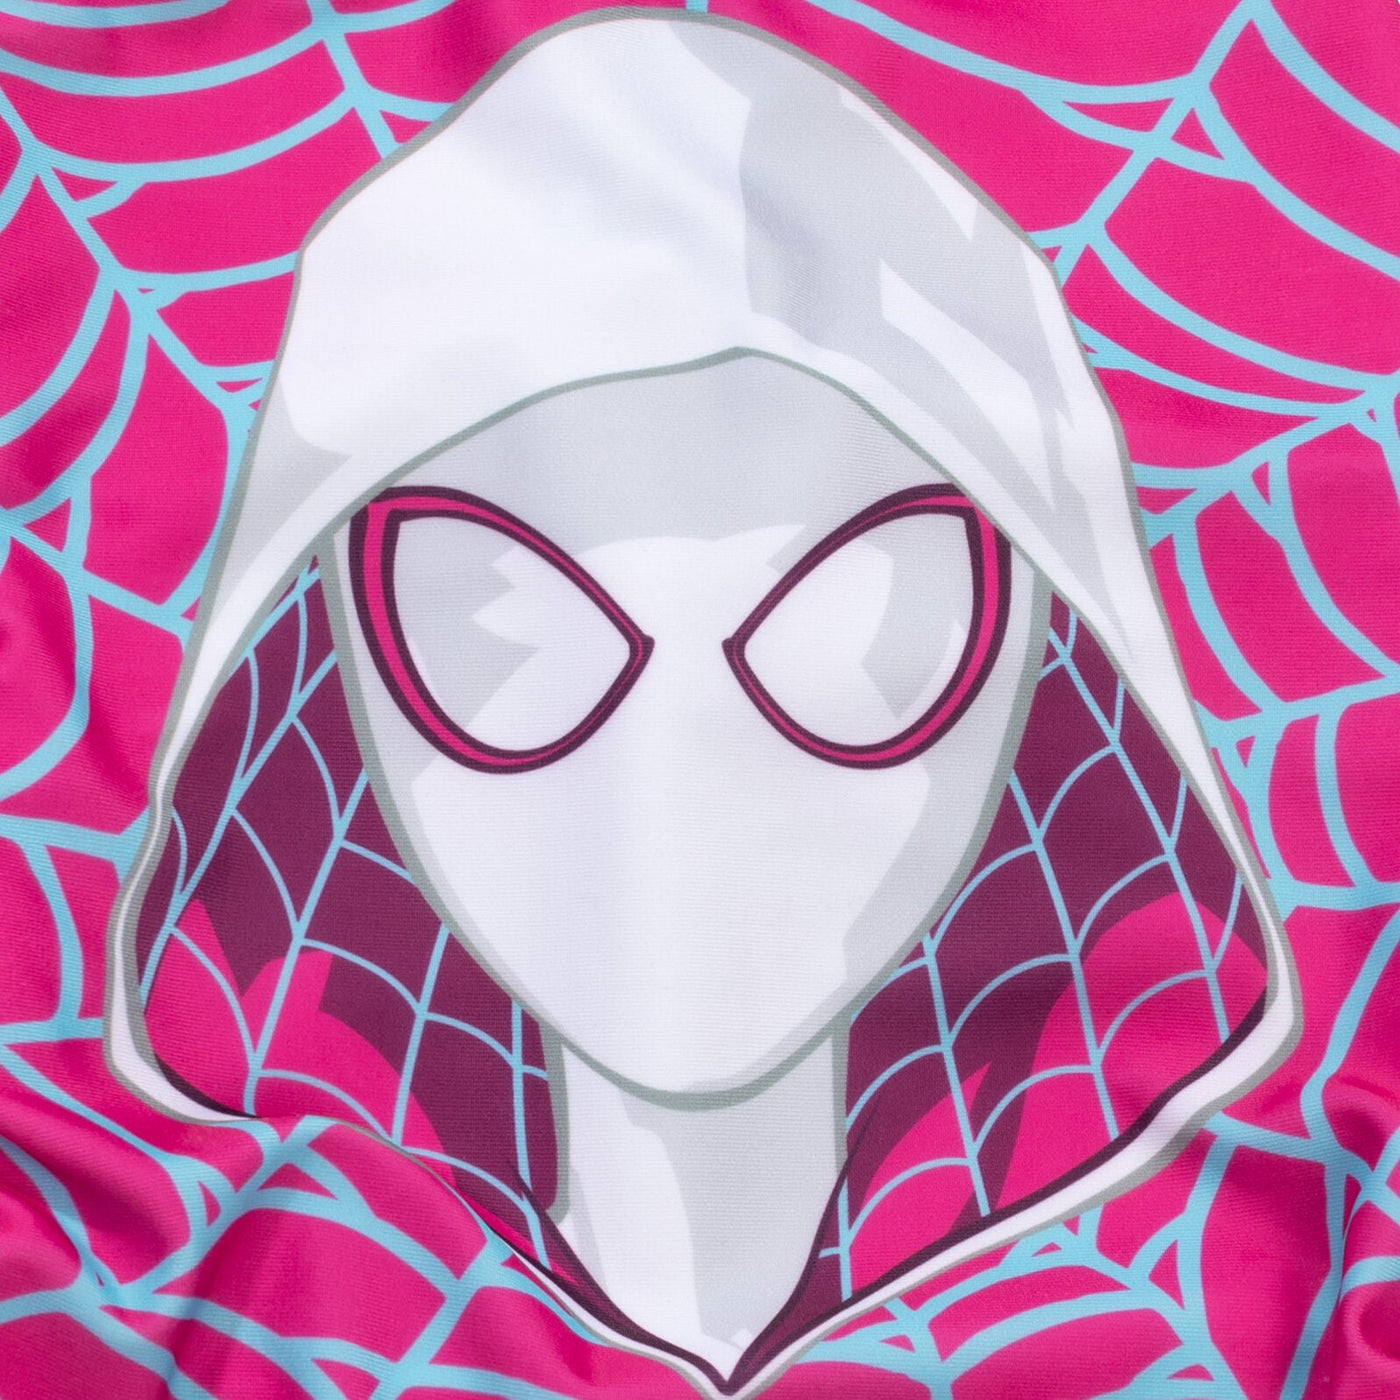 Marvel Spider - Man Ghost - Spider One Piece Bathing Suit - imagikids